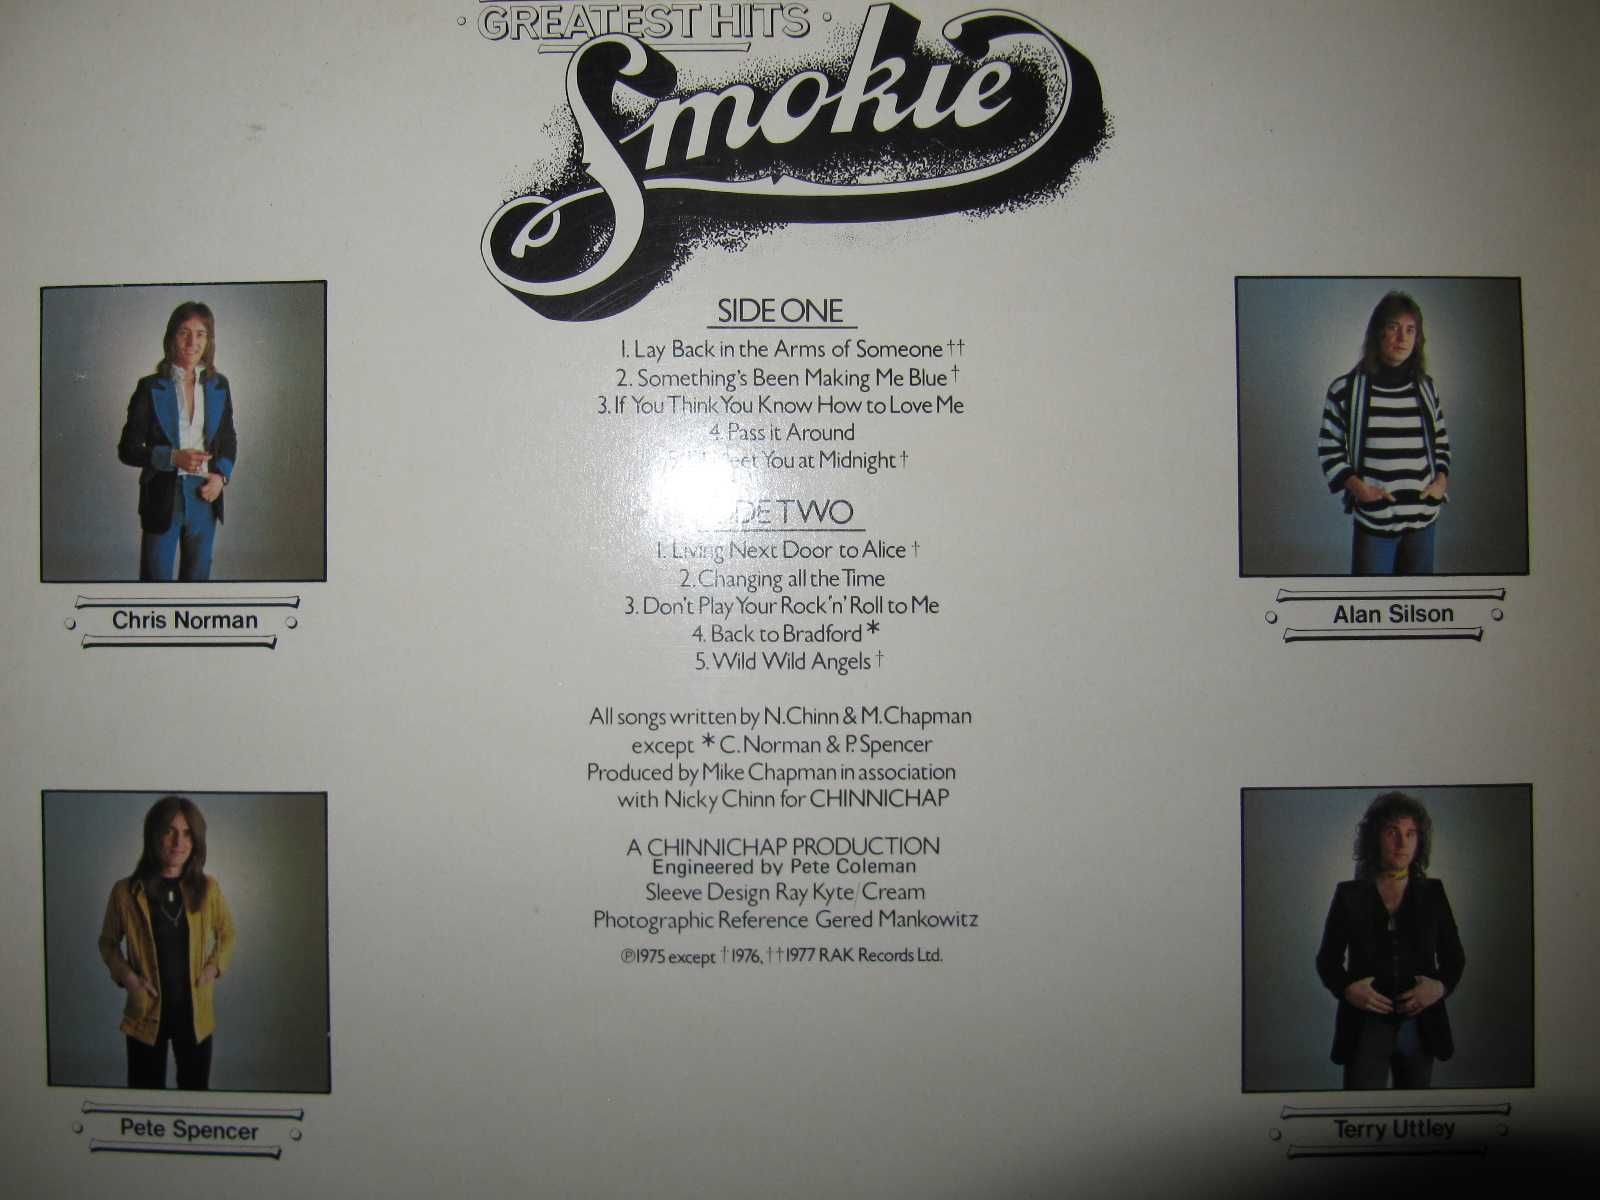 Виниловый Альбом SMOKIE -Greatest Hits- 1977 *England (ОРИГИНАЛ) NM/NM